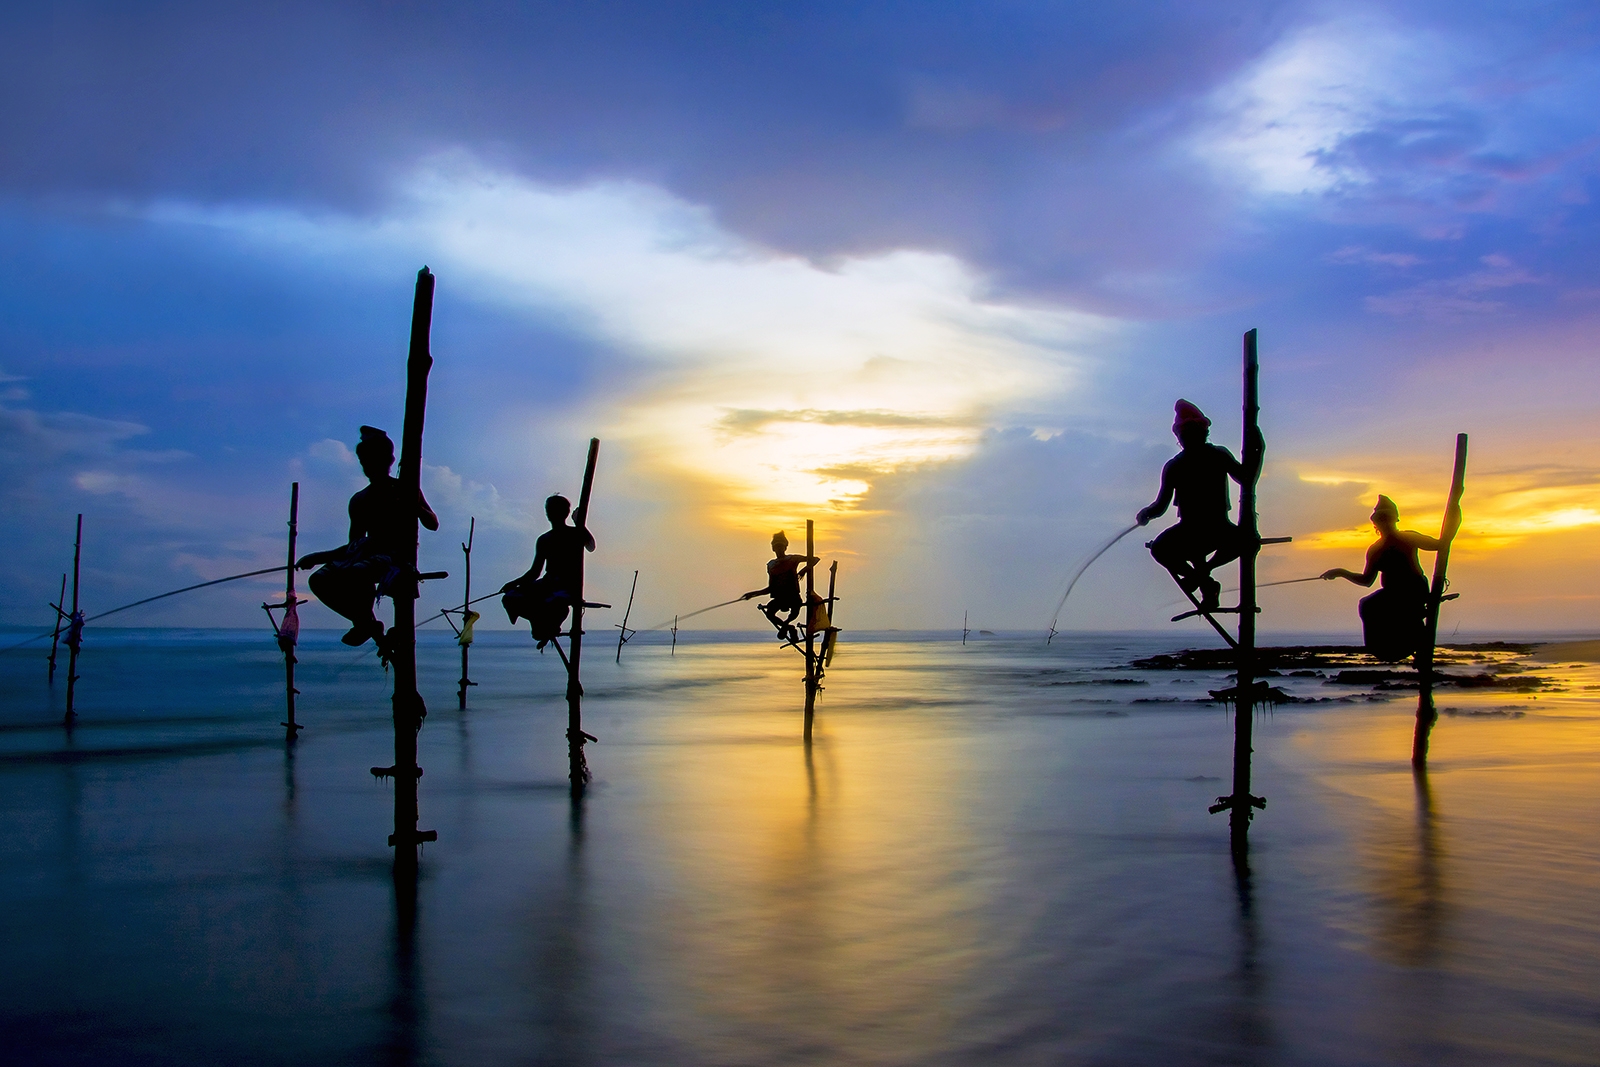 Silhouettes of the traditional Sri Lankan stilt fishermen on a s